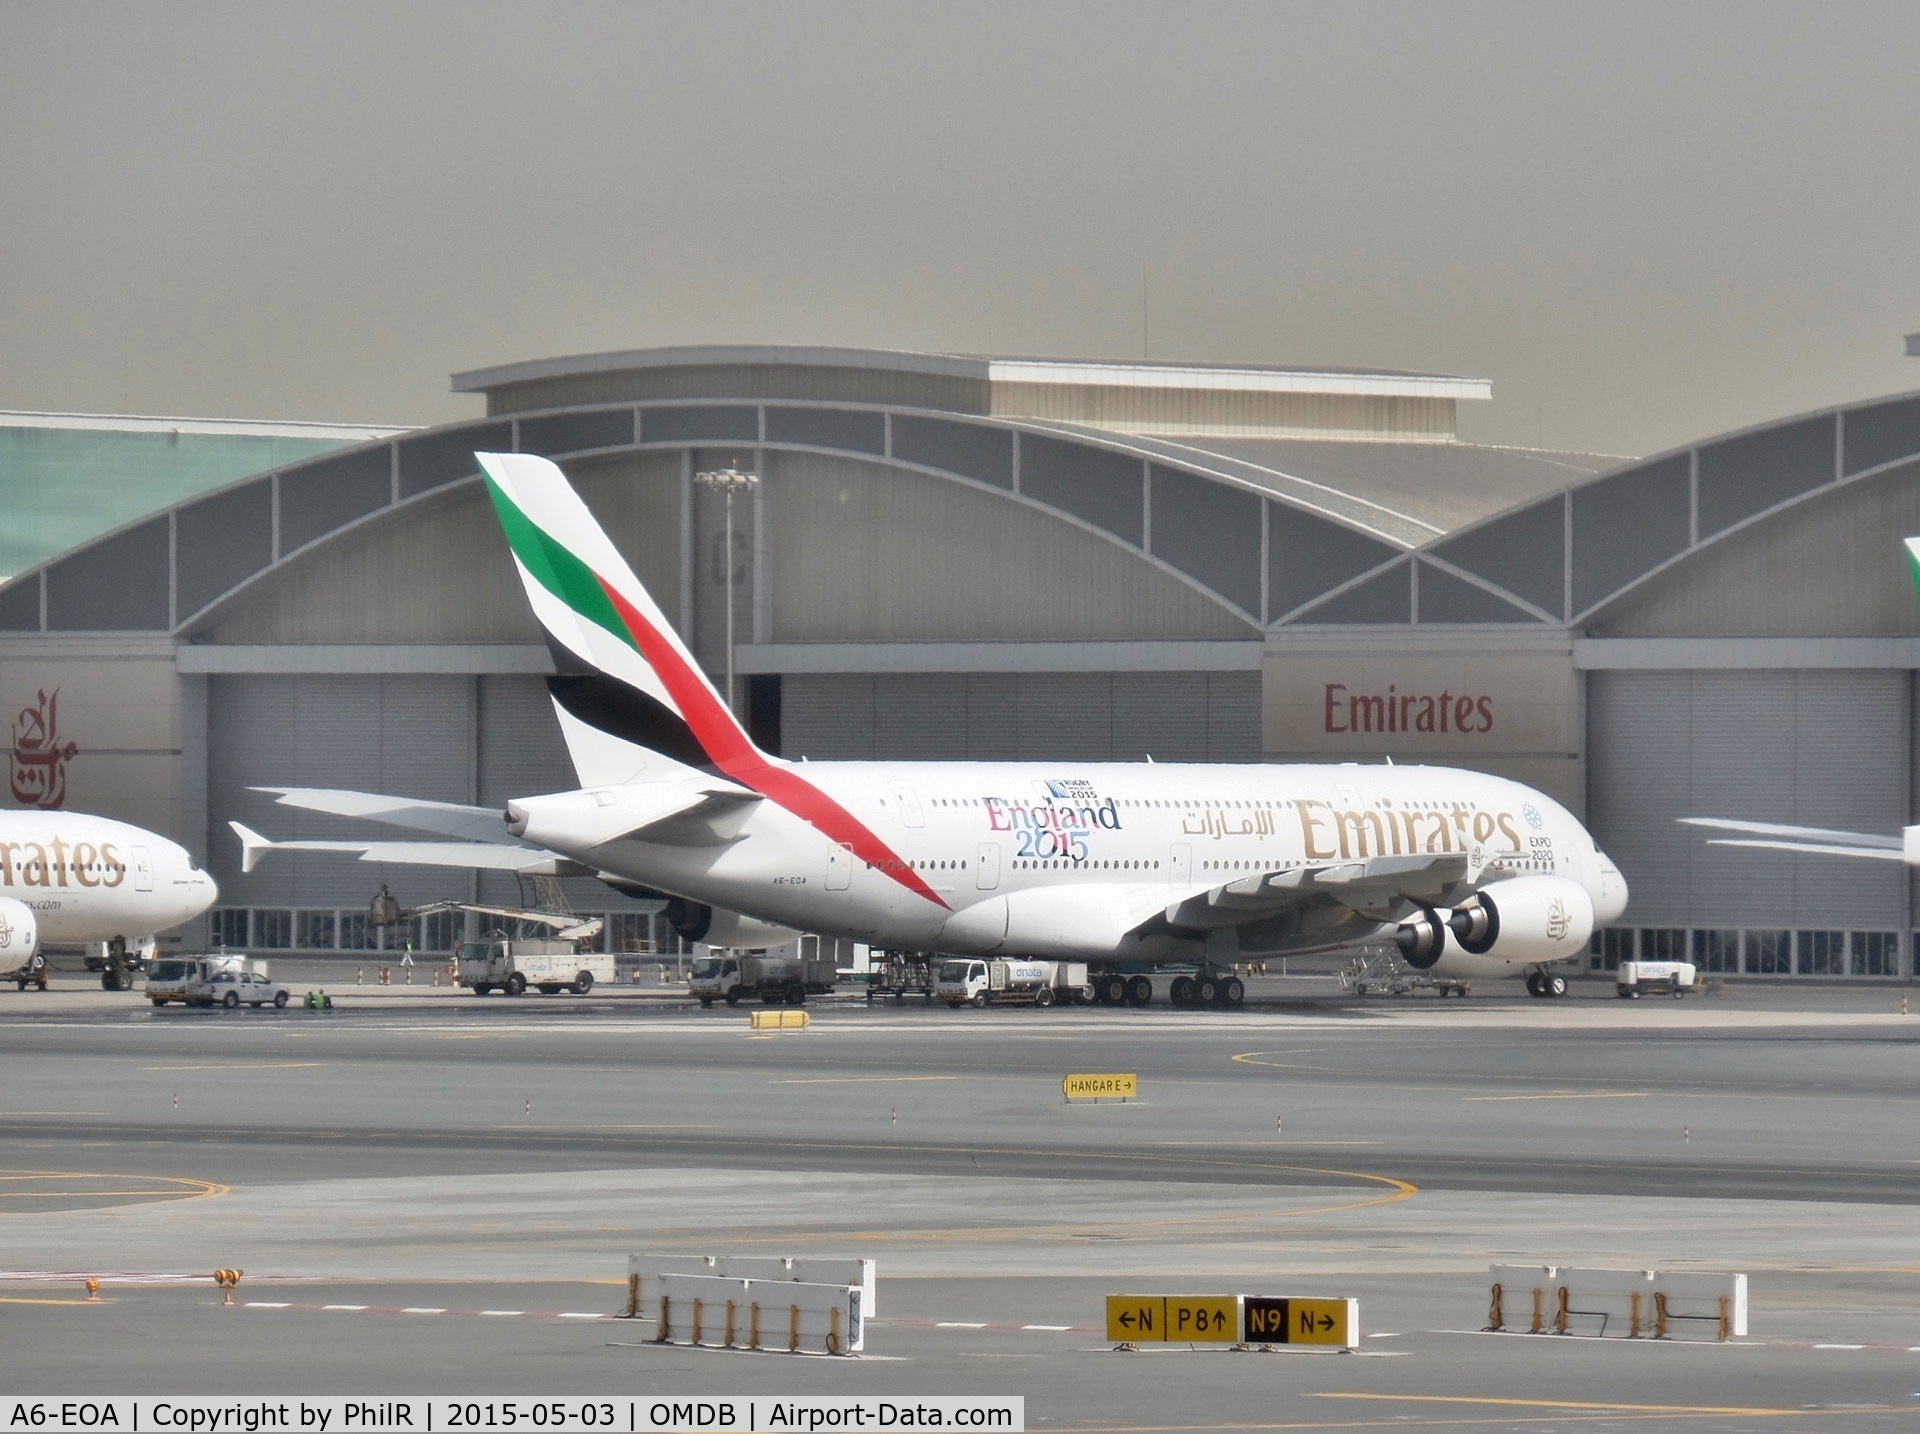 A6-EOA, 2014 Airbus A380-861 C/N 159, A6-EOA 2014 A380-800 Emirates Dubai